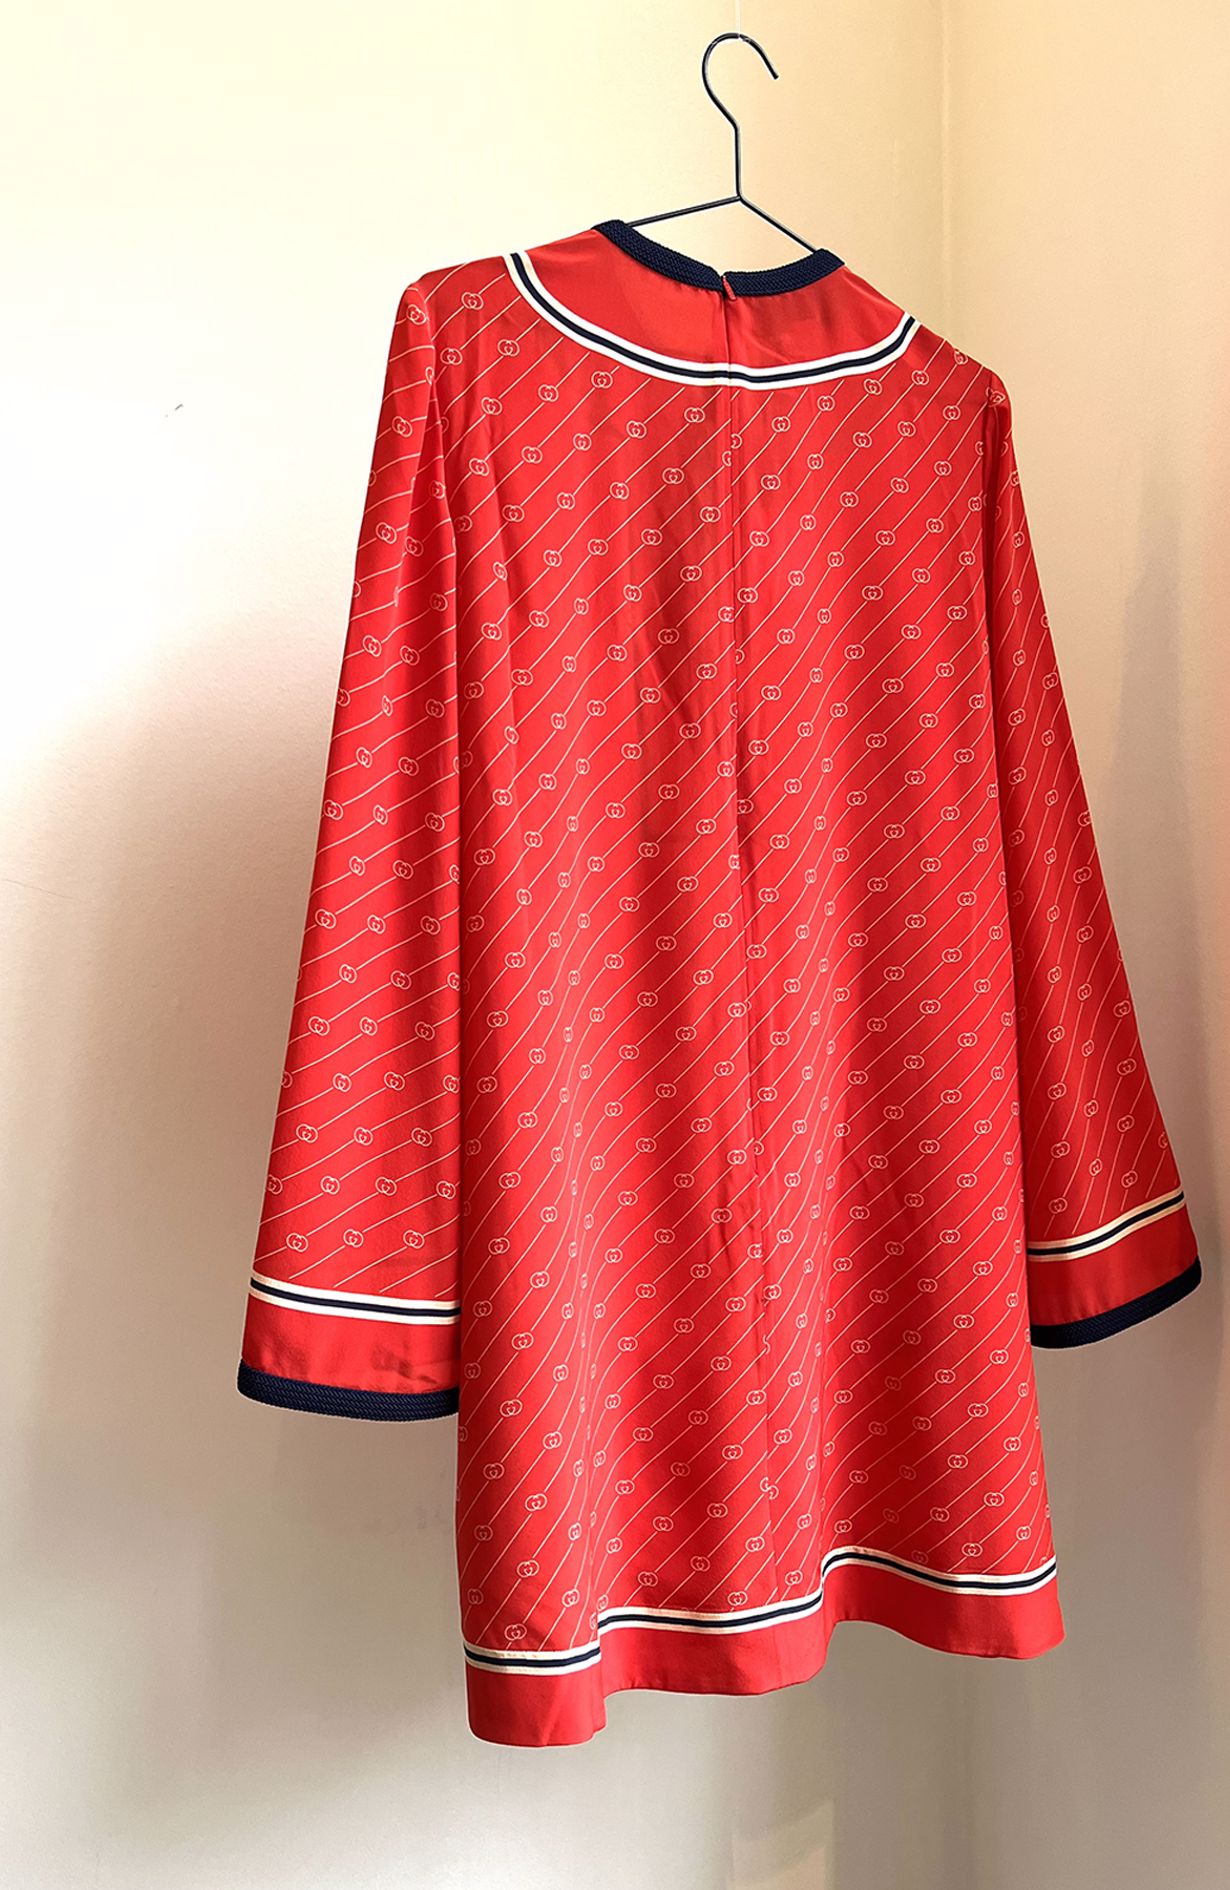 Gucci Silk Dress w. Red & Navy Tassles - Size 40